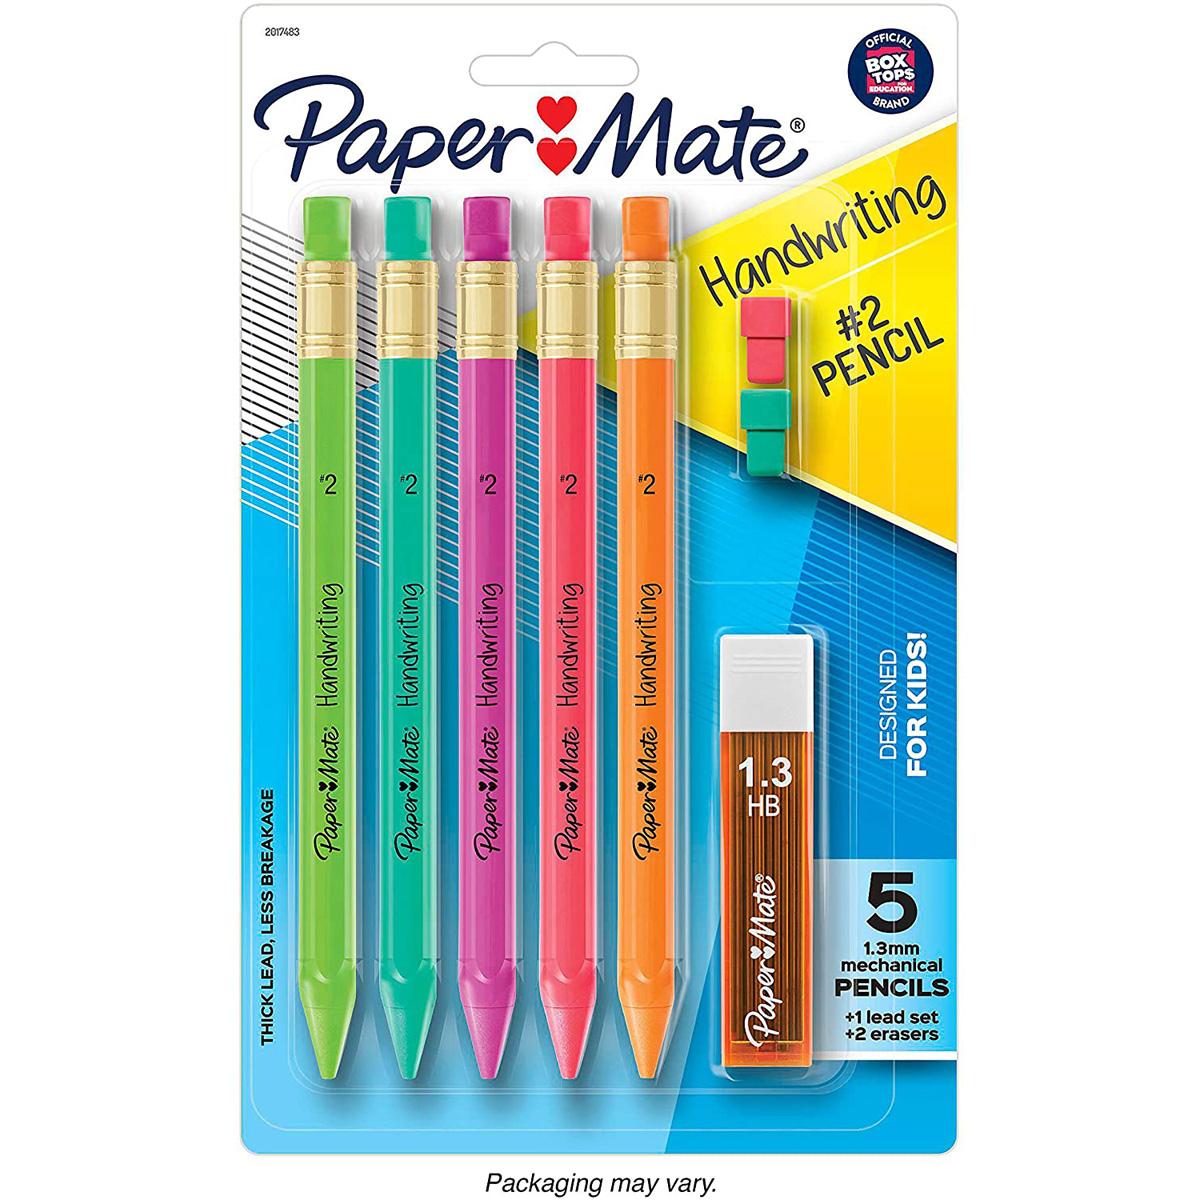 5 Paper Mate 1.3mm Handwriting Triangular Mechanical Pencil Set for $2.97